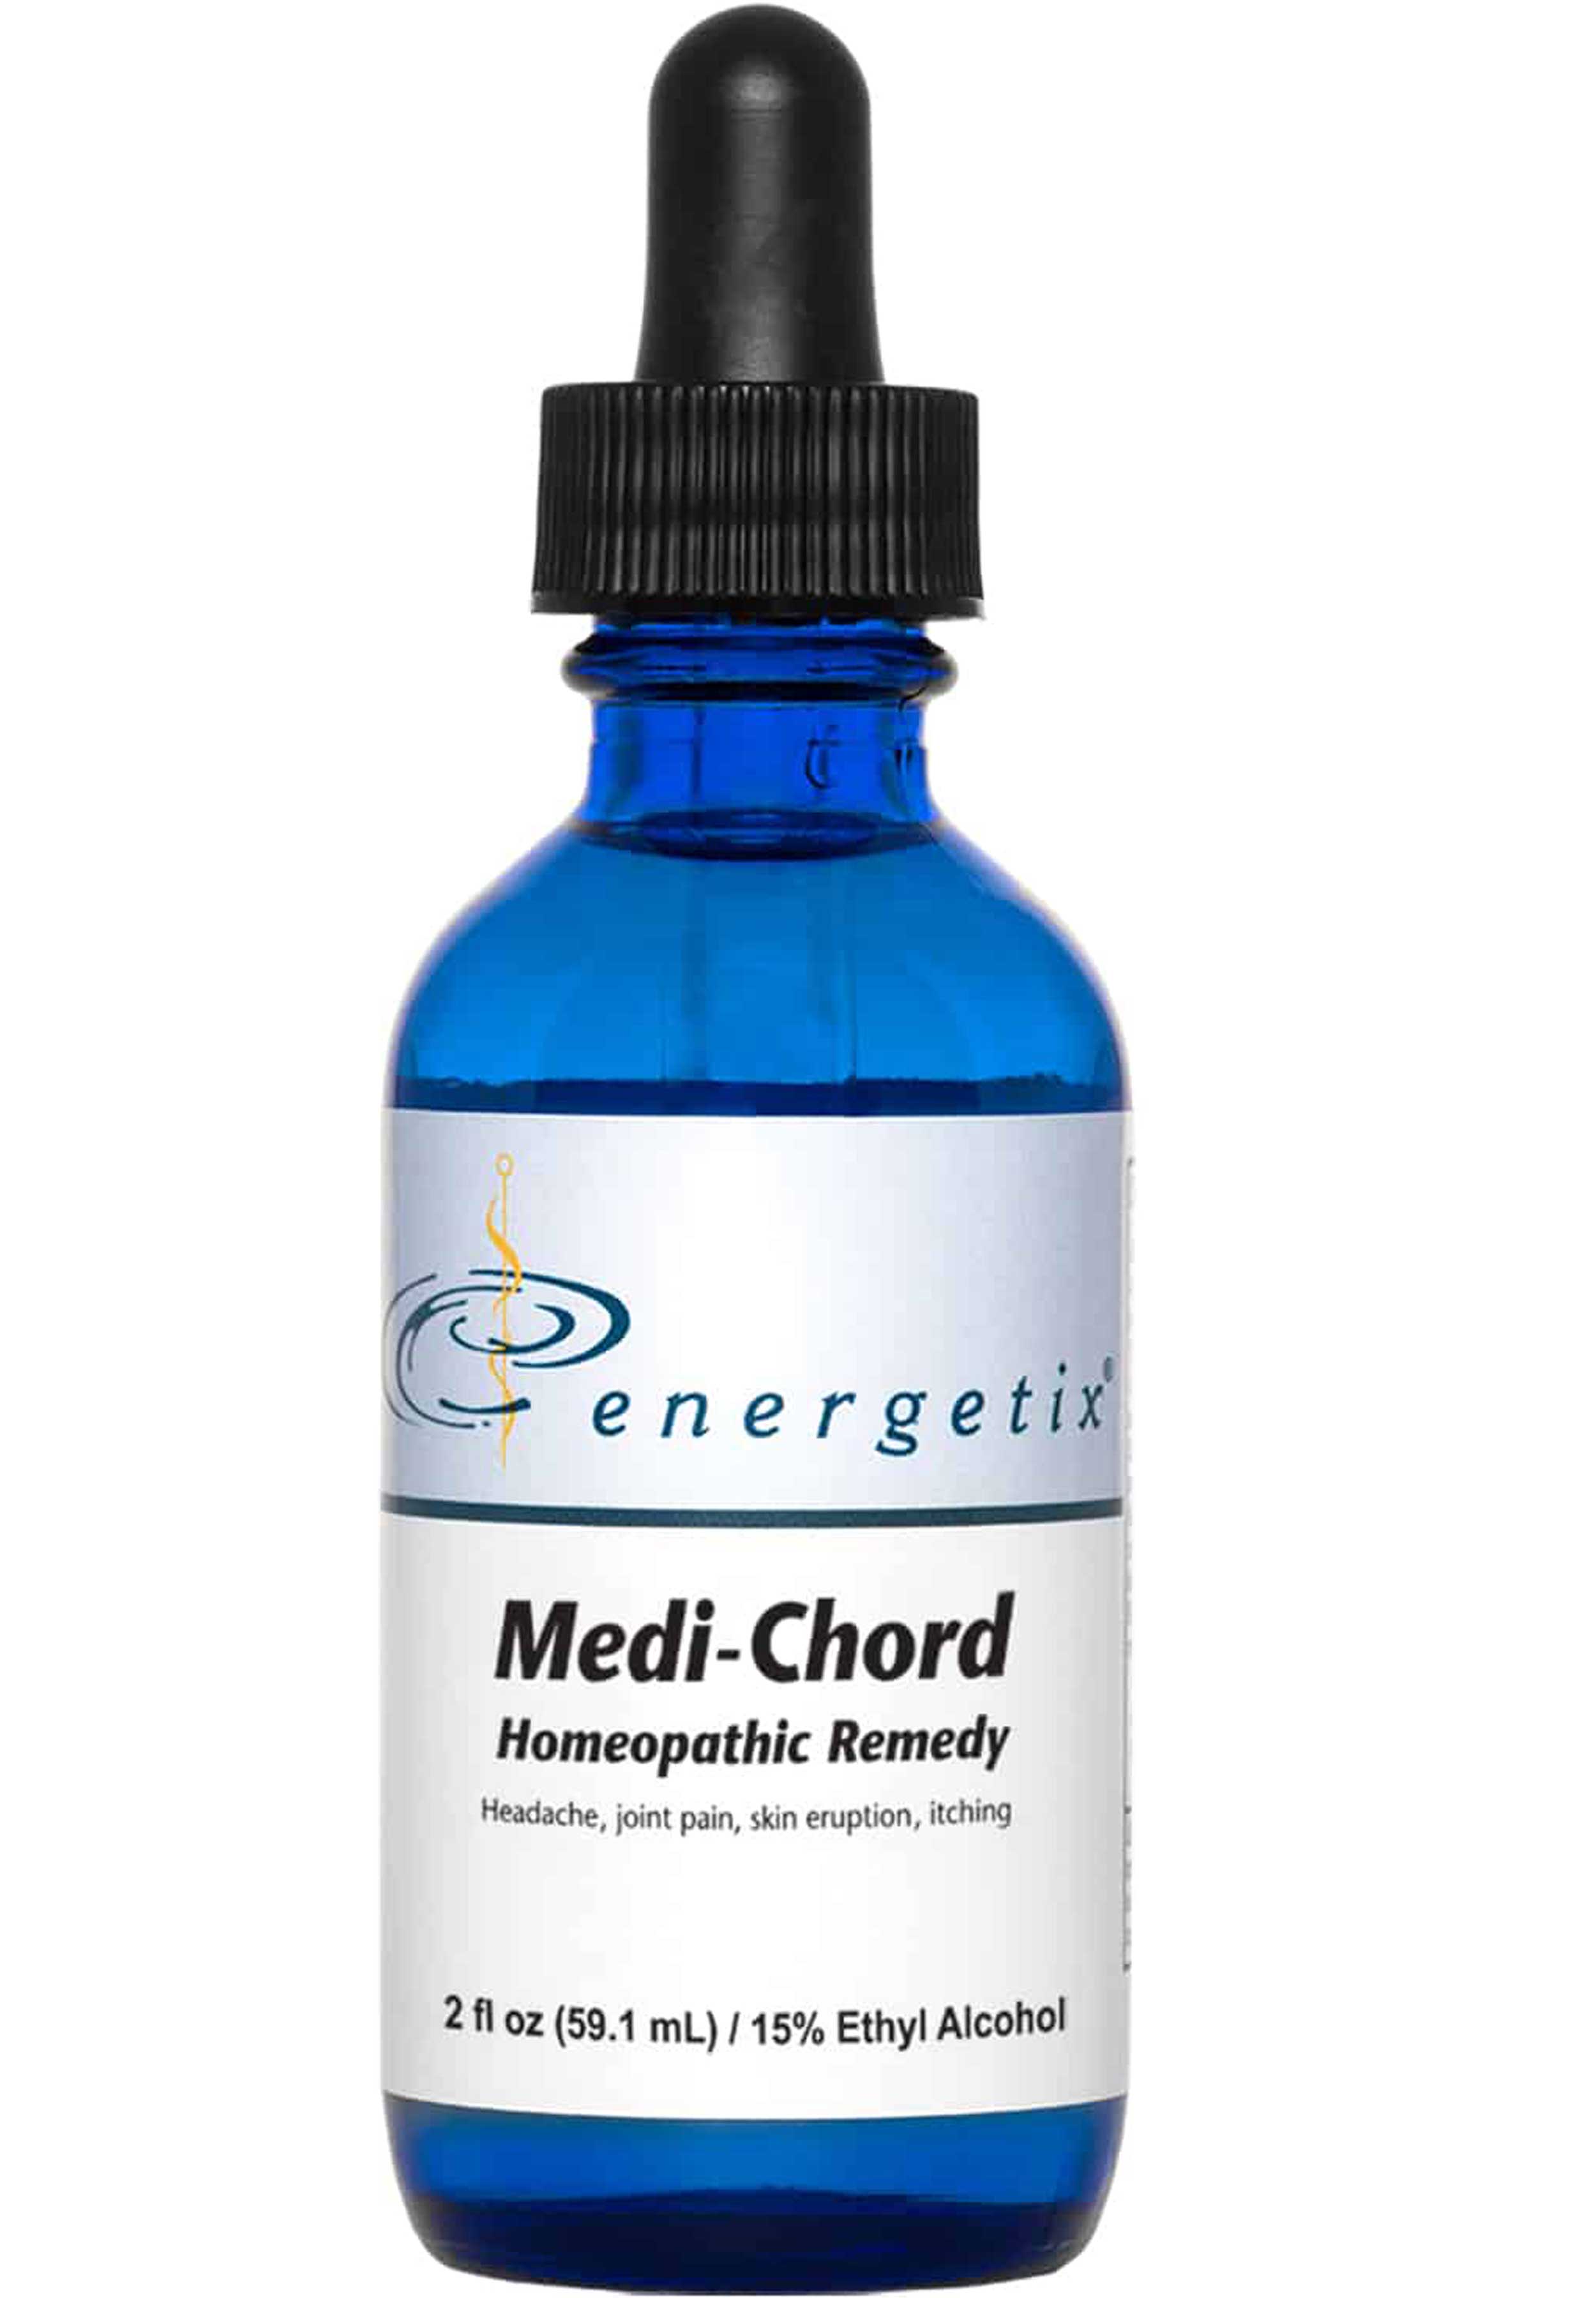 Energetix Medi-Chord